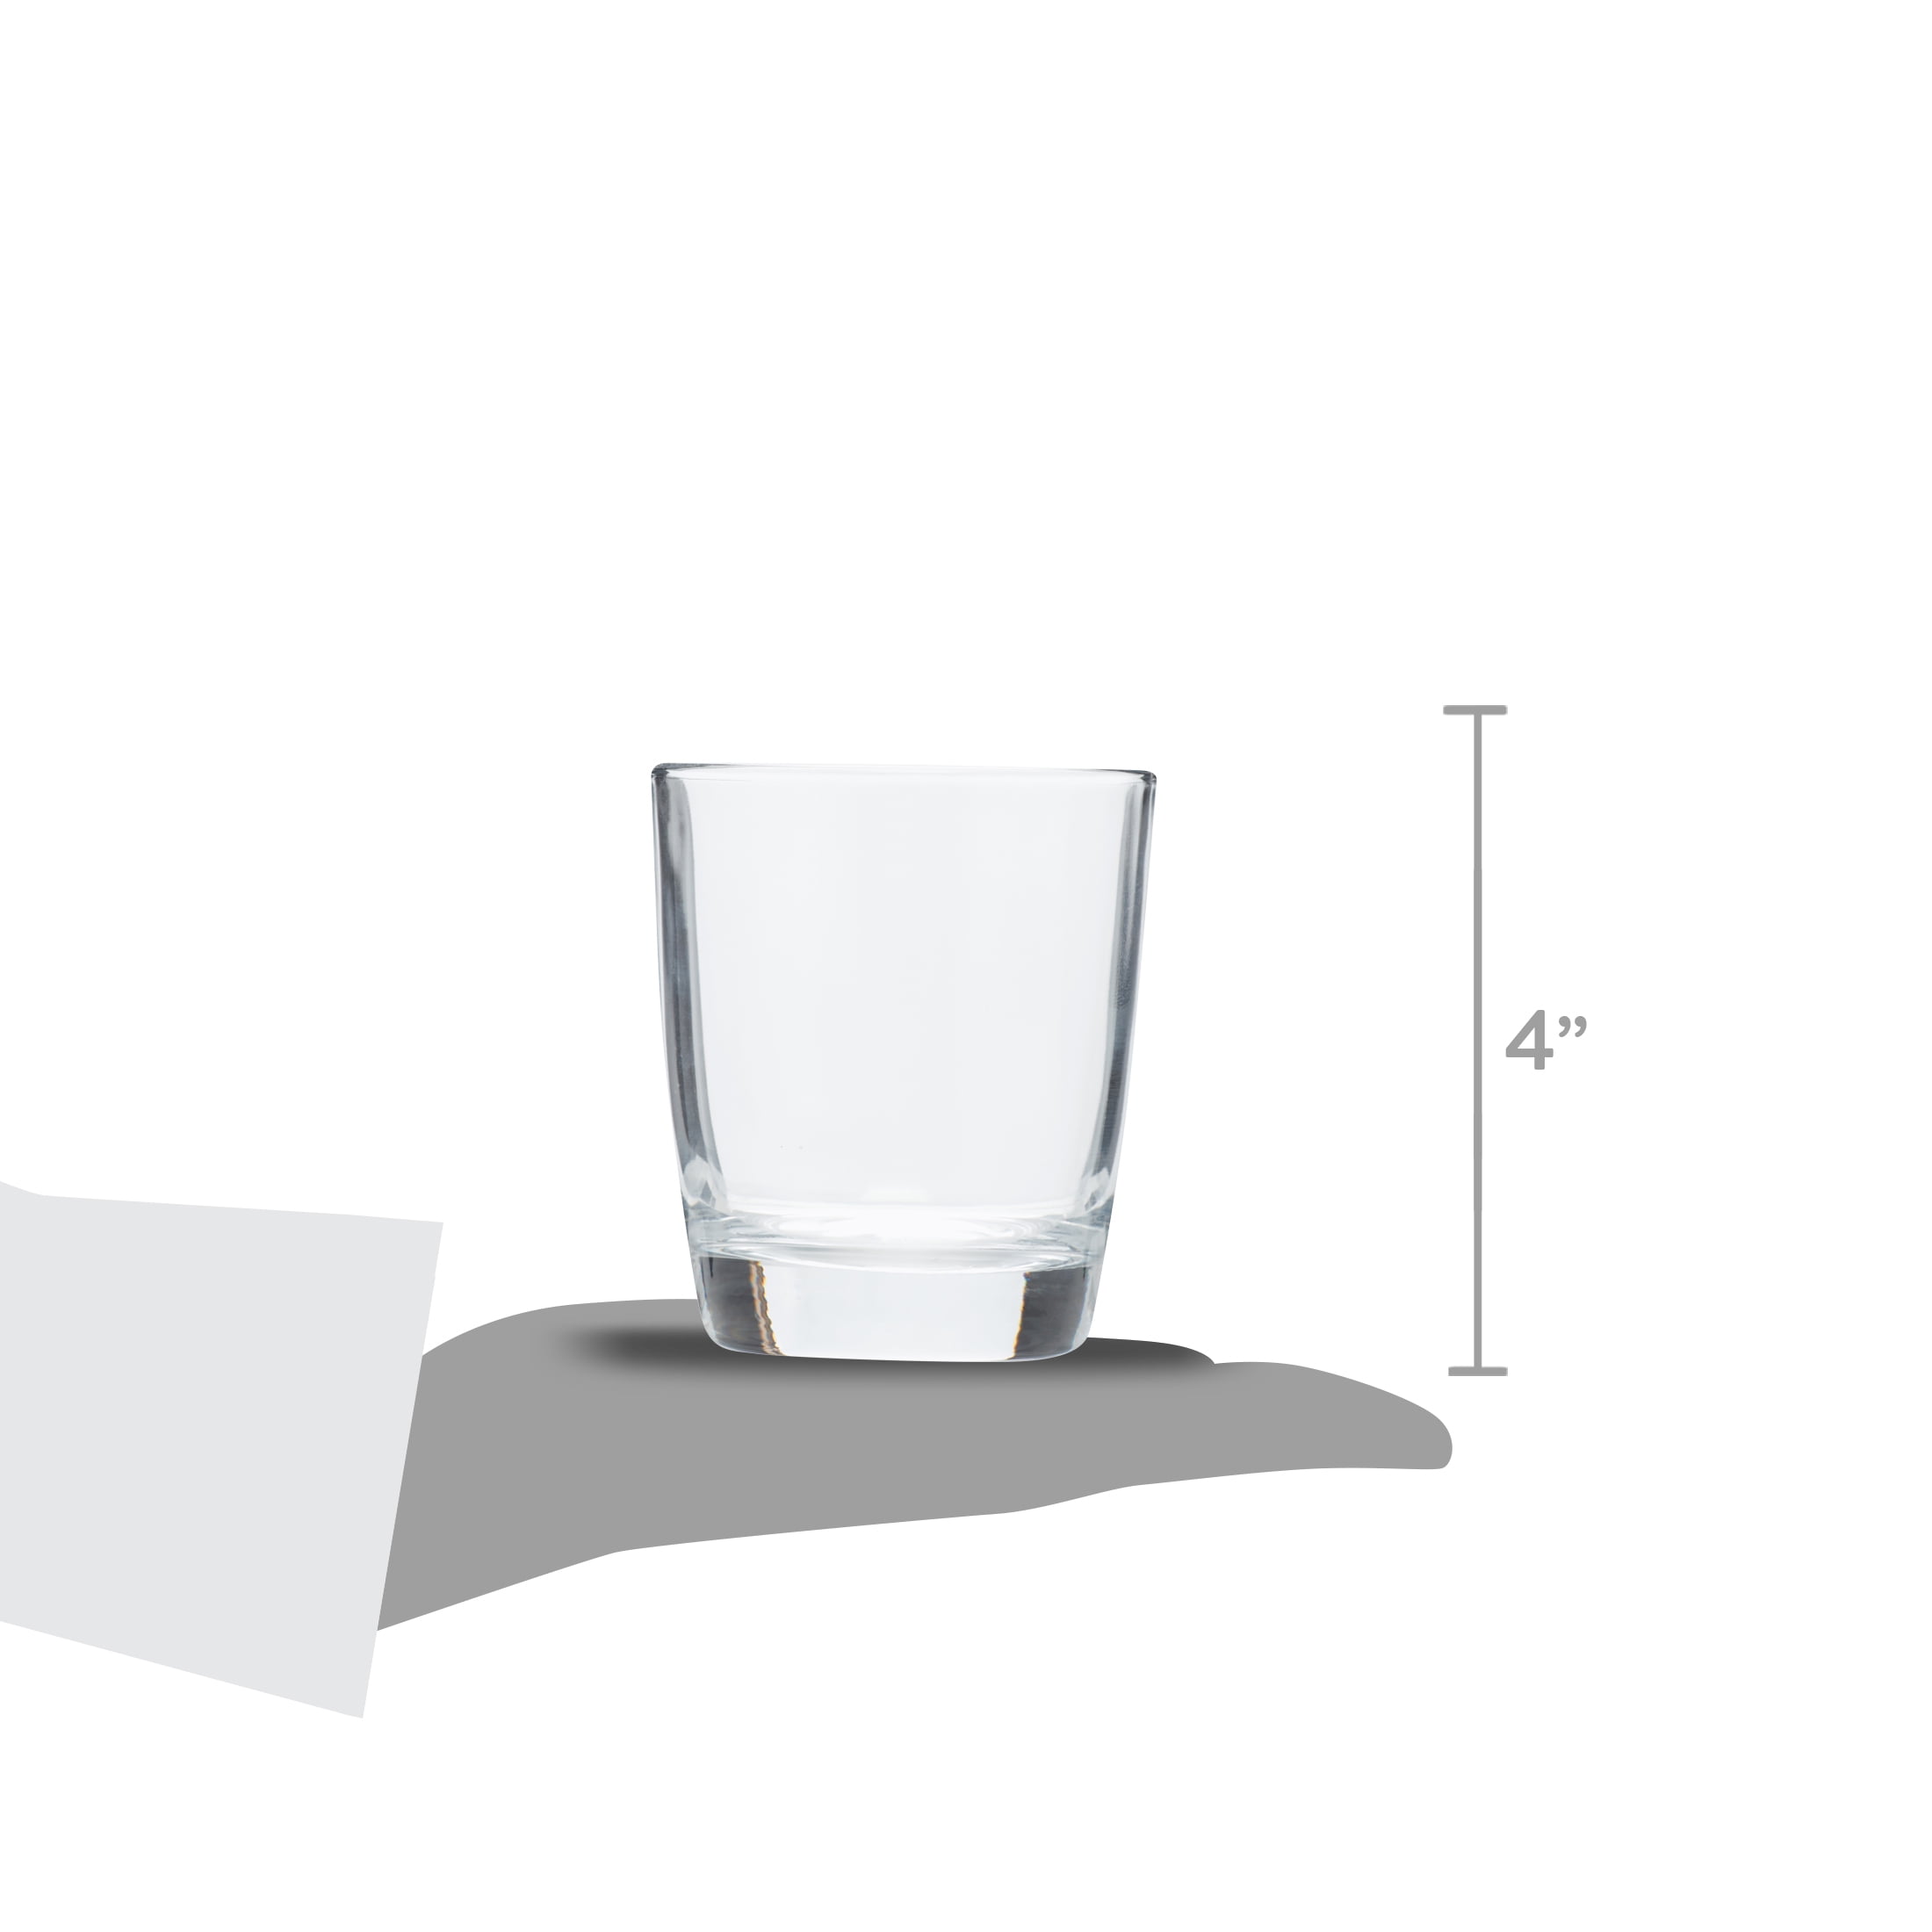 Mainstays Radiant Glass Drinkware Set, 16 Piece Set, 16 Ounce & 12 Ounce 